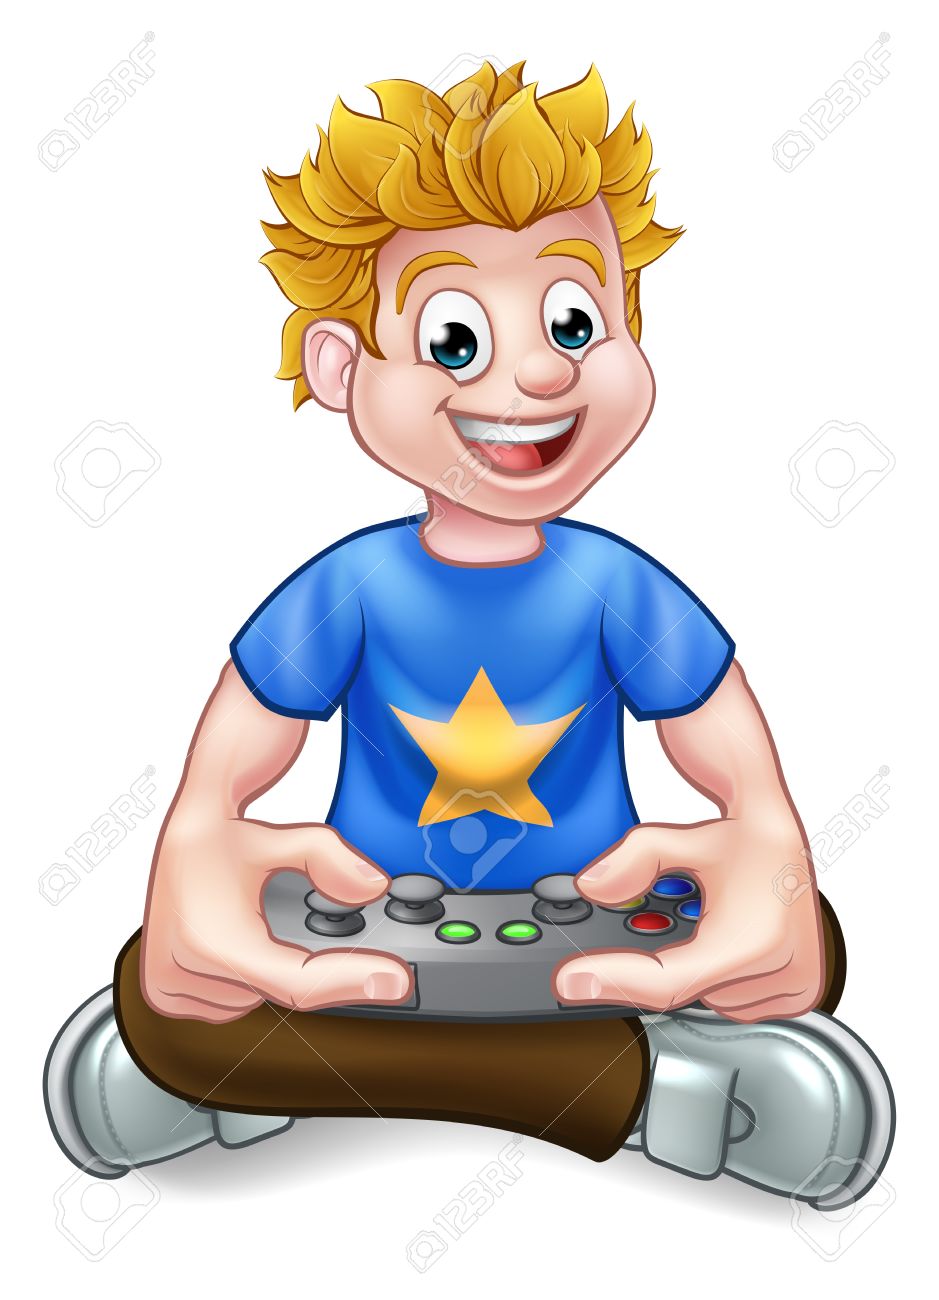 A cartoon gamer having fun playing video games.